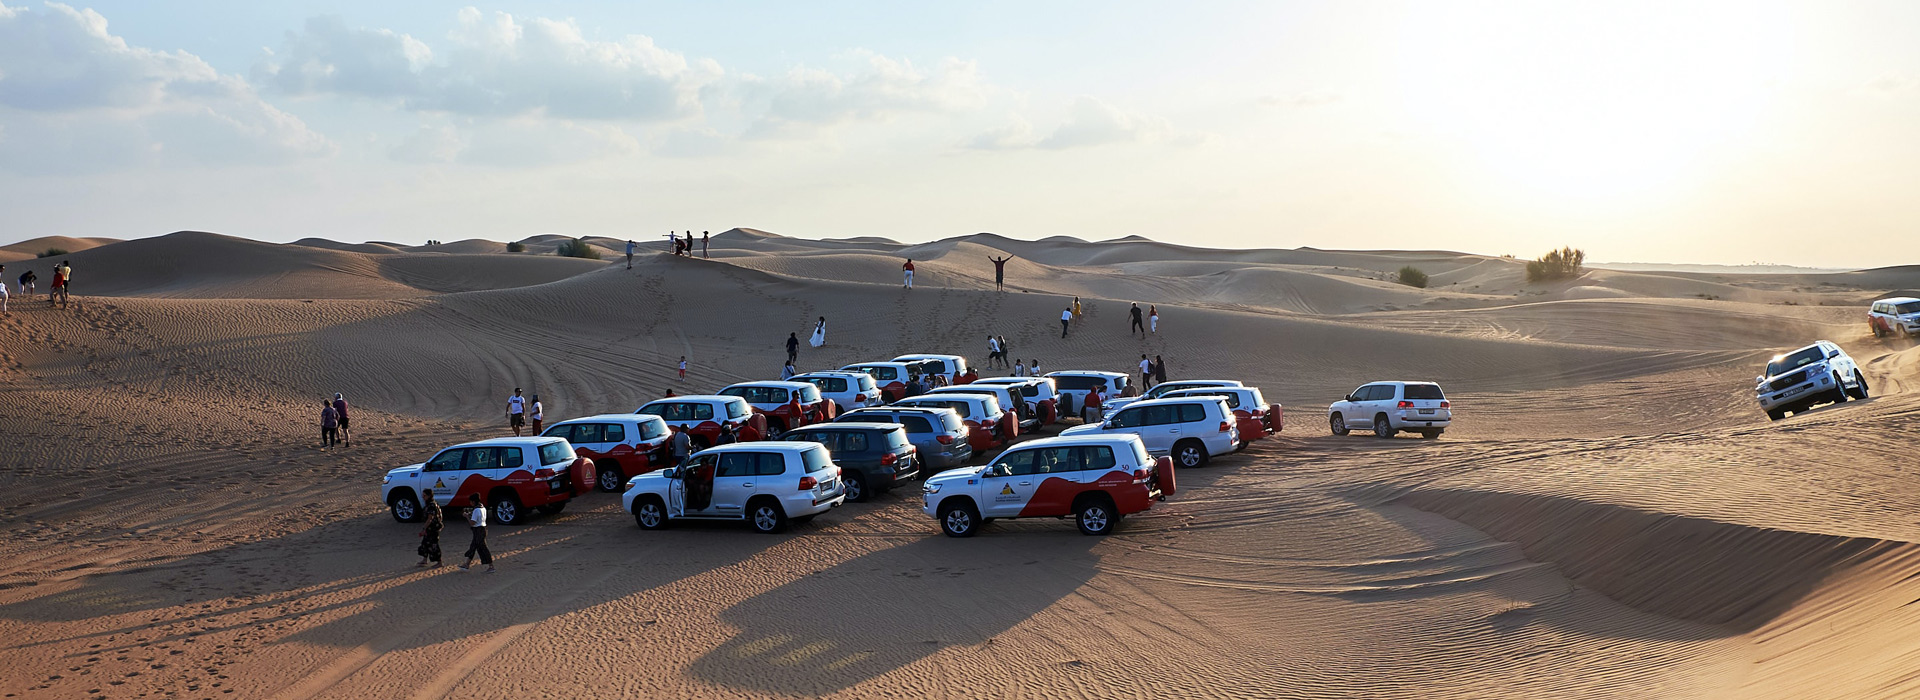 Desert safari in Fujairah | Desert safari in Dubai